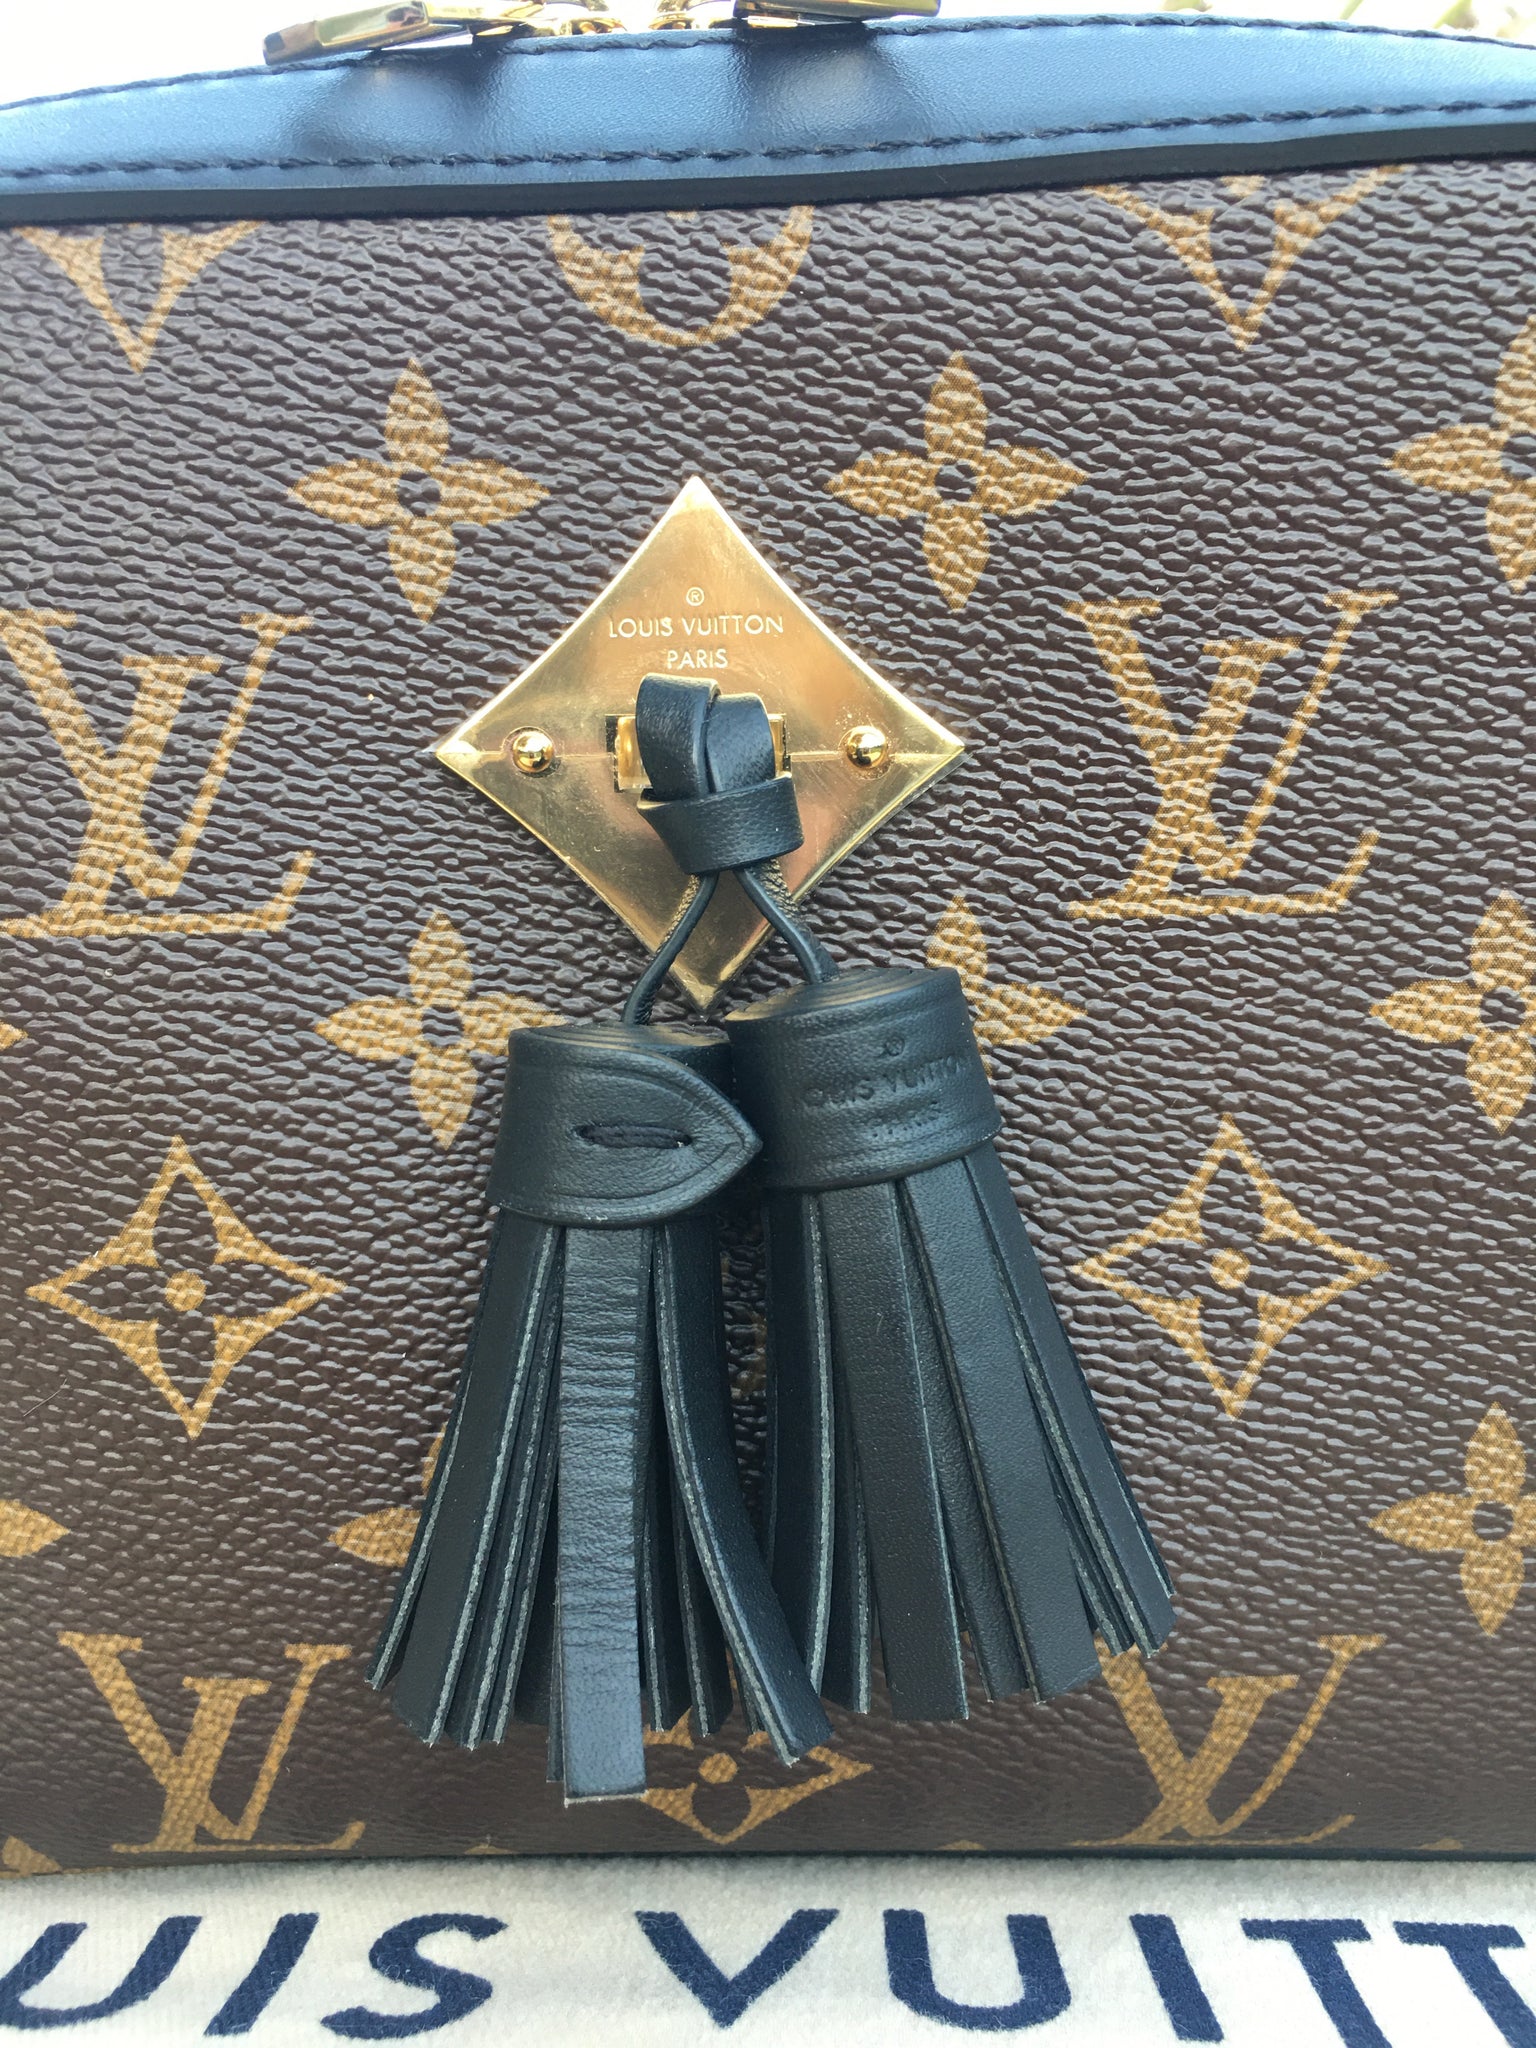 Saintonge leather crossbody bag Louis Vuitton Black in Leather - 22242568